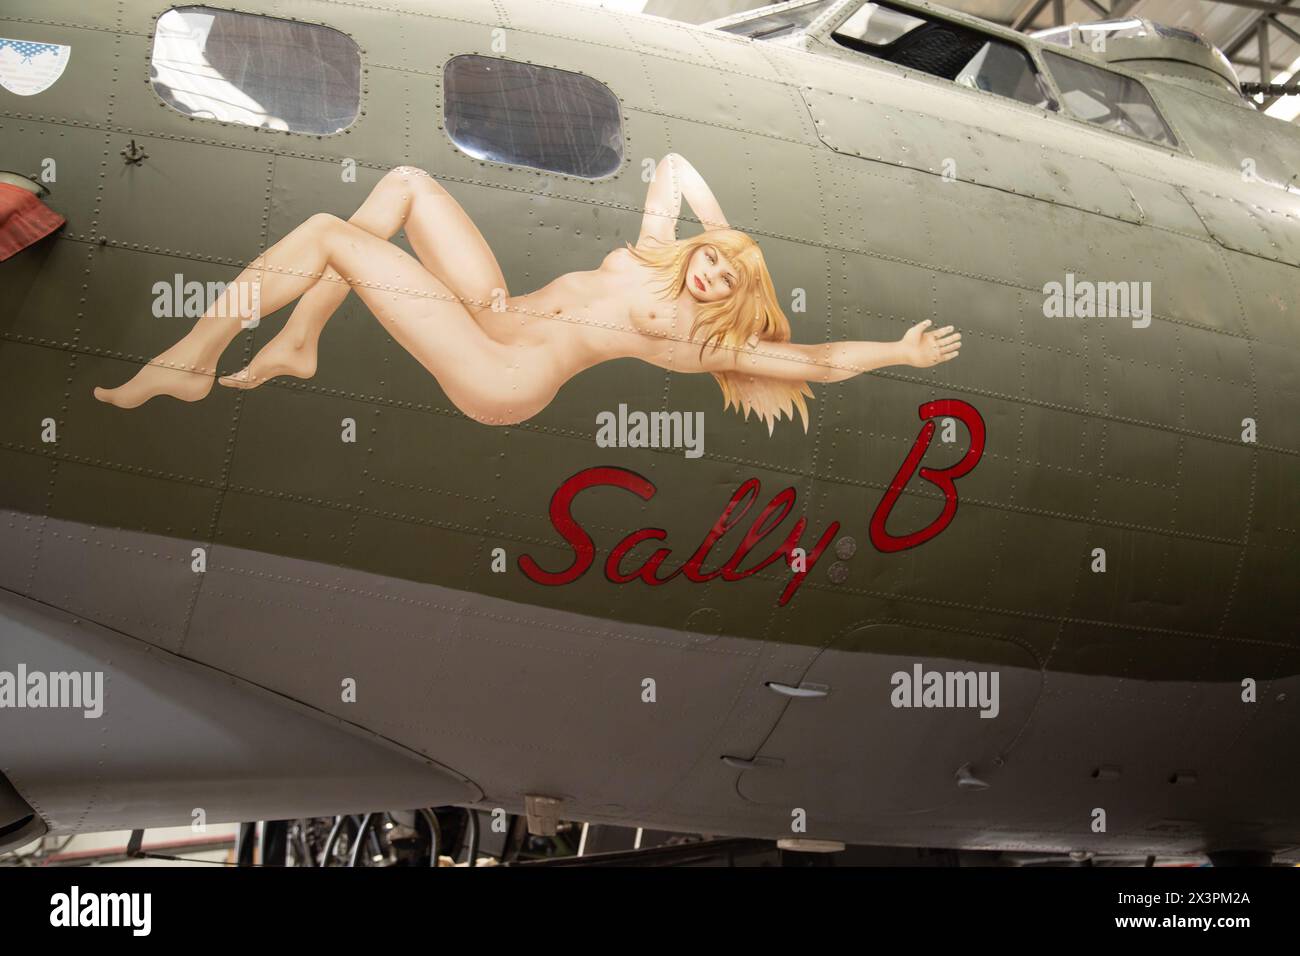 Sally B nose art on Boeing B-17 Flying Fortress, American four-engine World War II heavy bomber. IWM, Duxford, UK Stock Photo